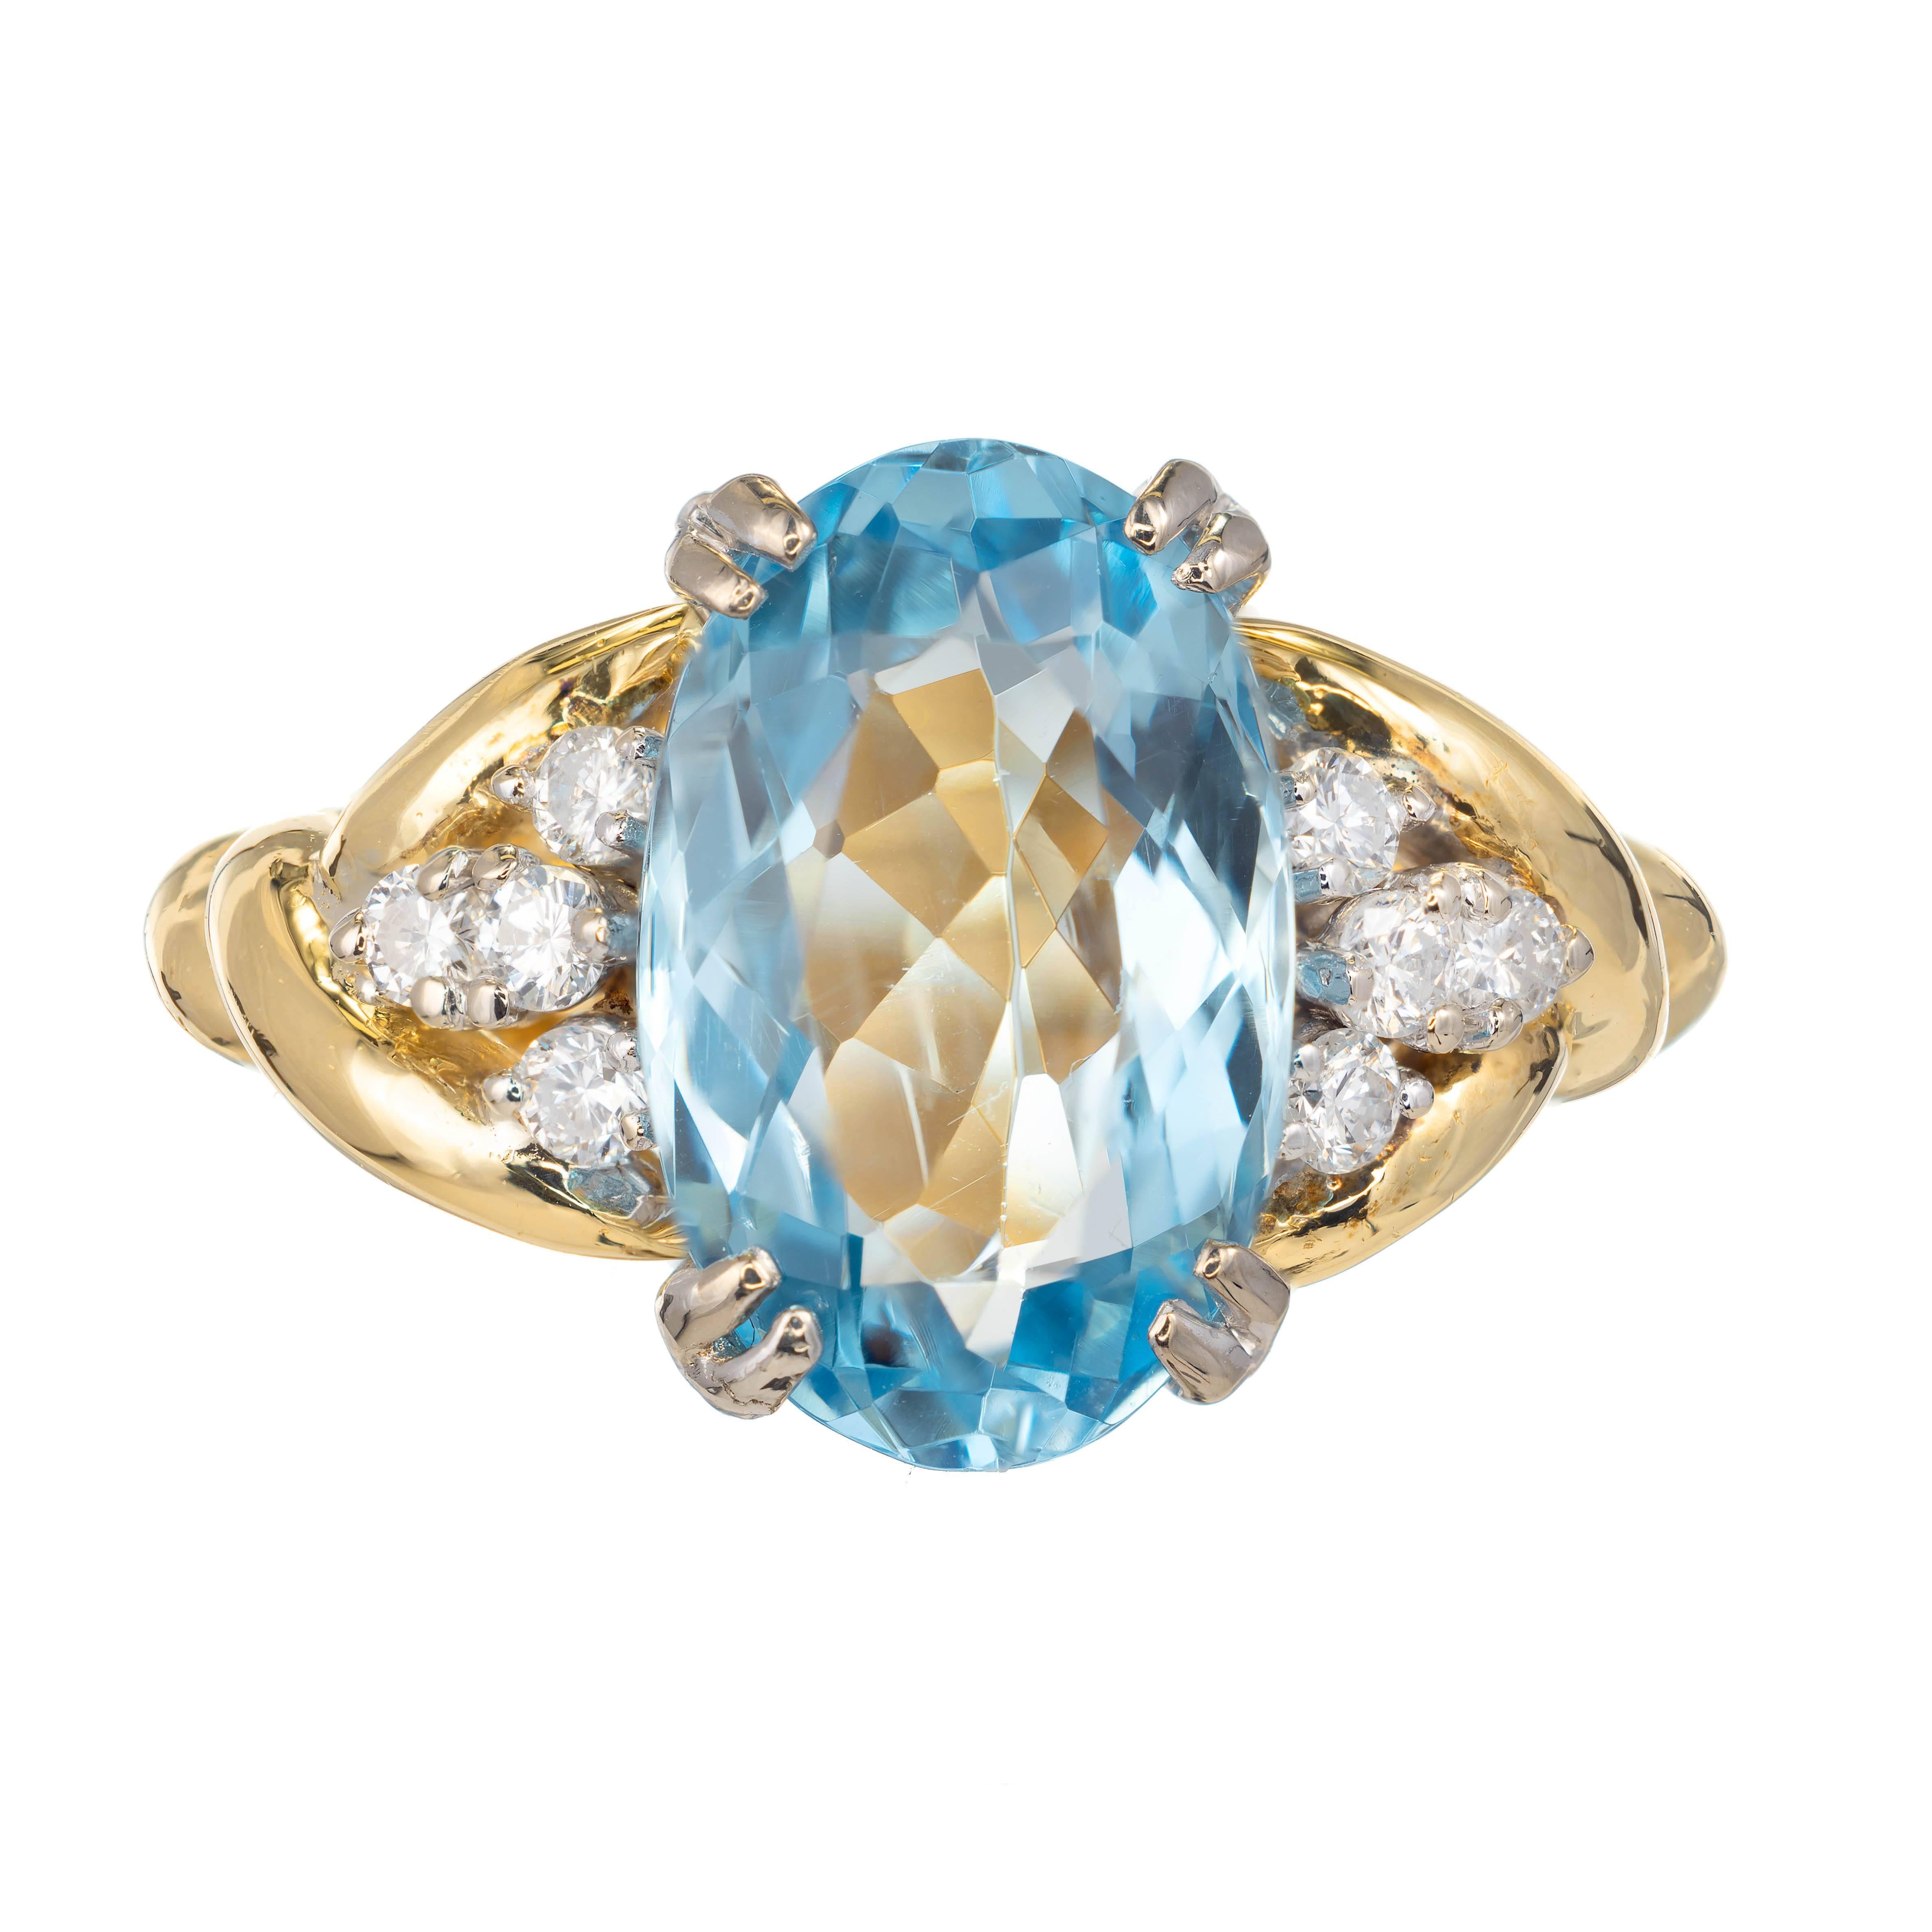 Oval Cut 4.11 Carat Natural Oval Aquamarine Diamond Gold Engagement Ring